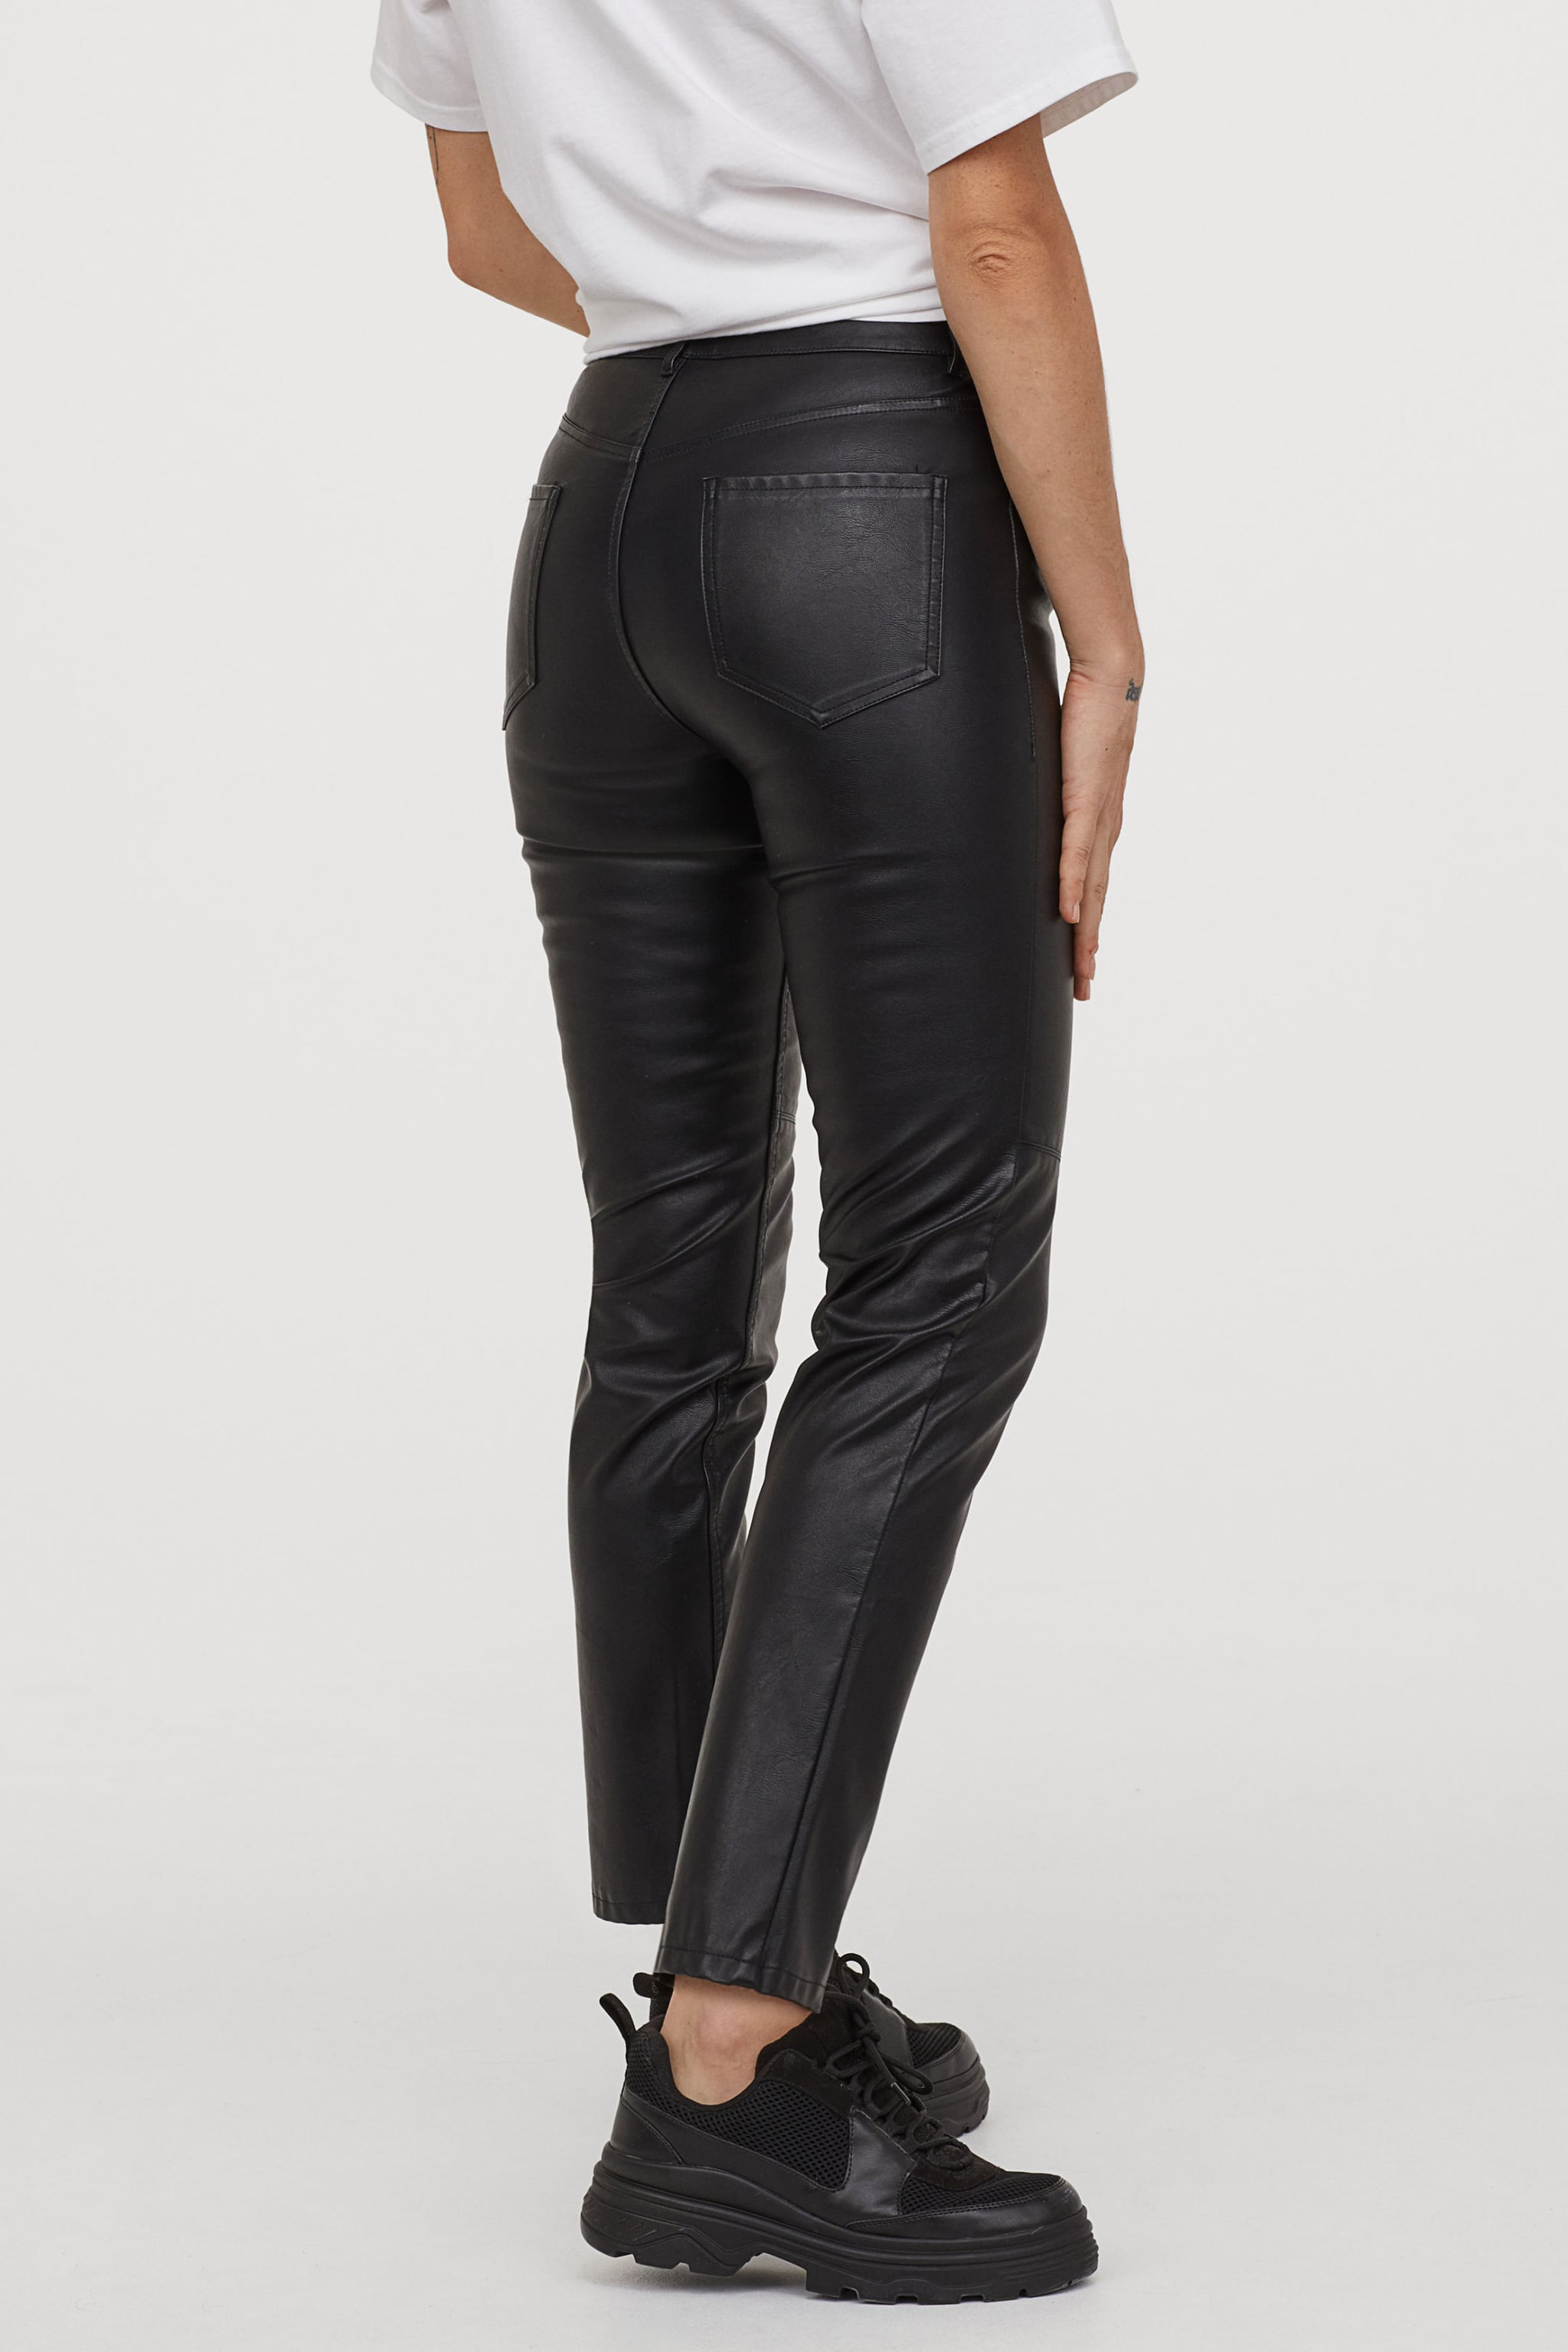 H&M Faux Leather Pants, Jennifer Aniston Has an Idea: Leather Pants and  Platform Oxford Shoes